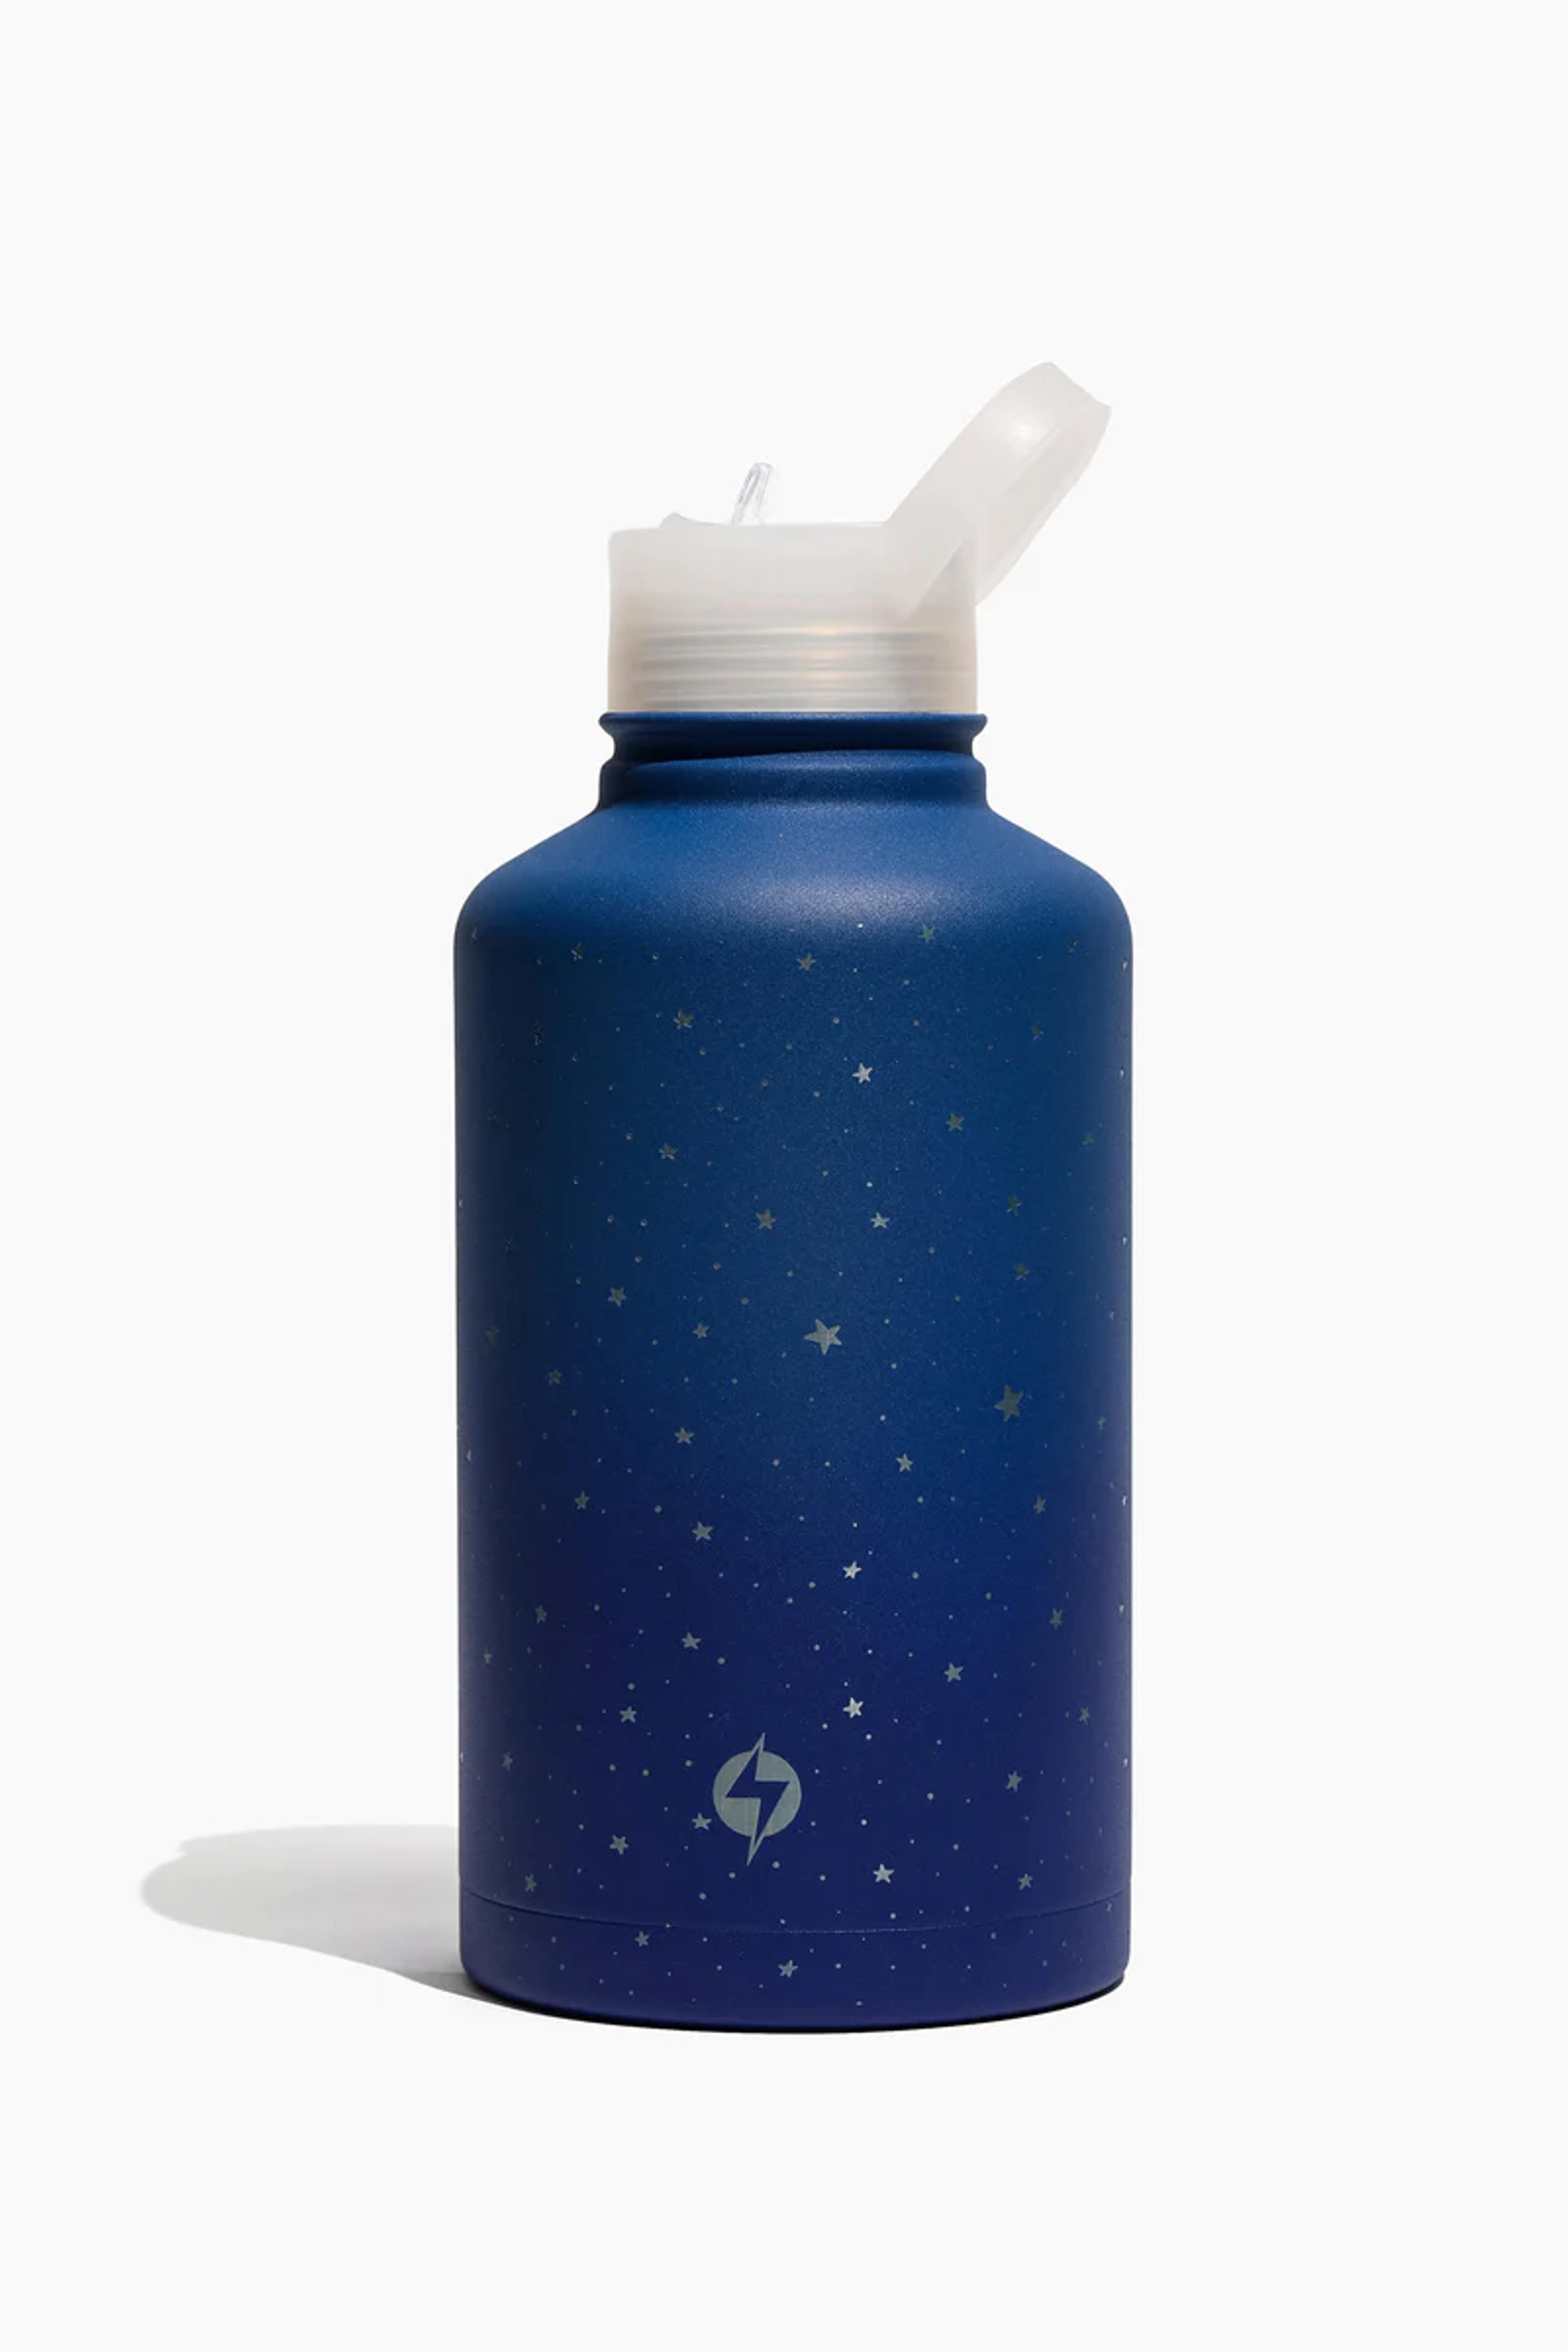 Diamond Sky Bottle - 64 oz with Free Bag